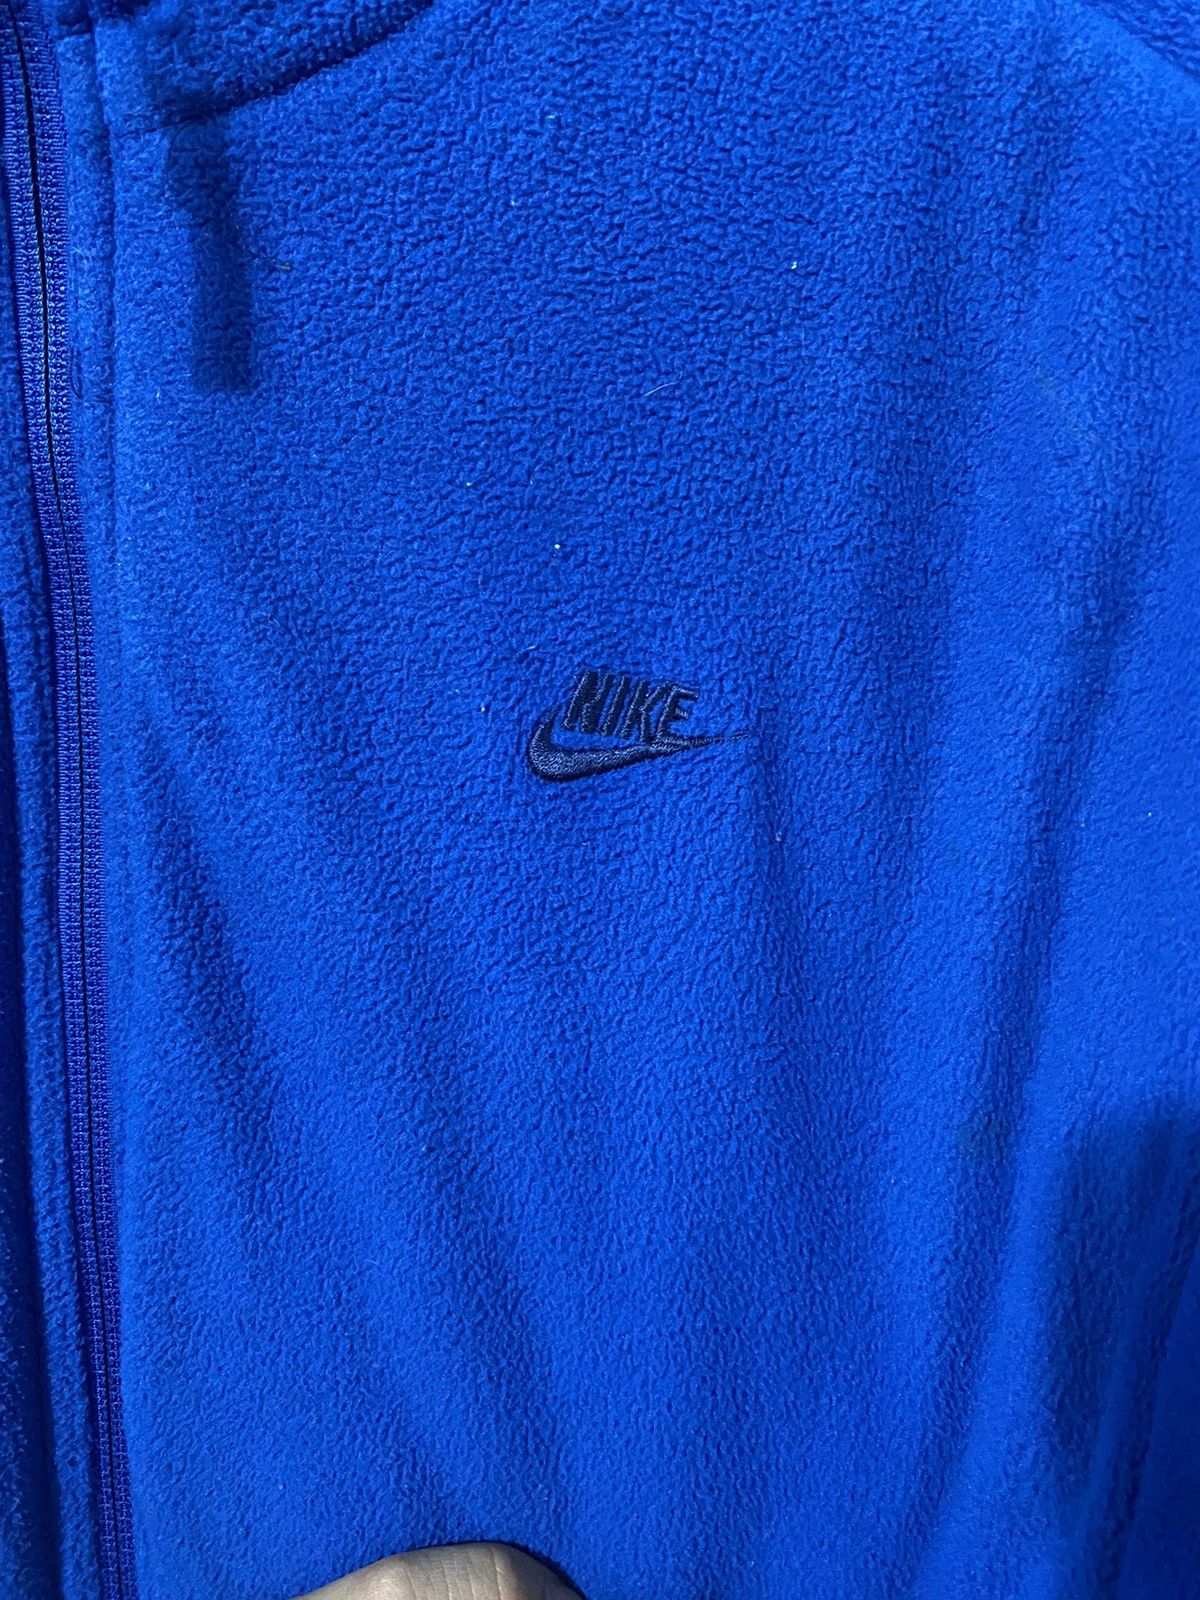 Nike VINTAGE Y2K NIKE JACKET Size US L / EU 52-54 / 3 - 9 Thumbnail